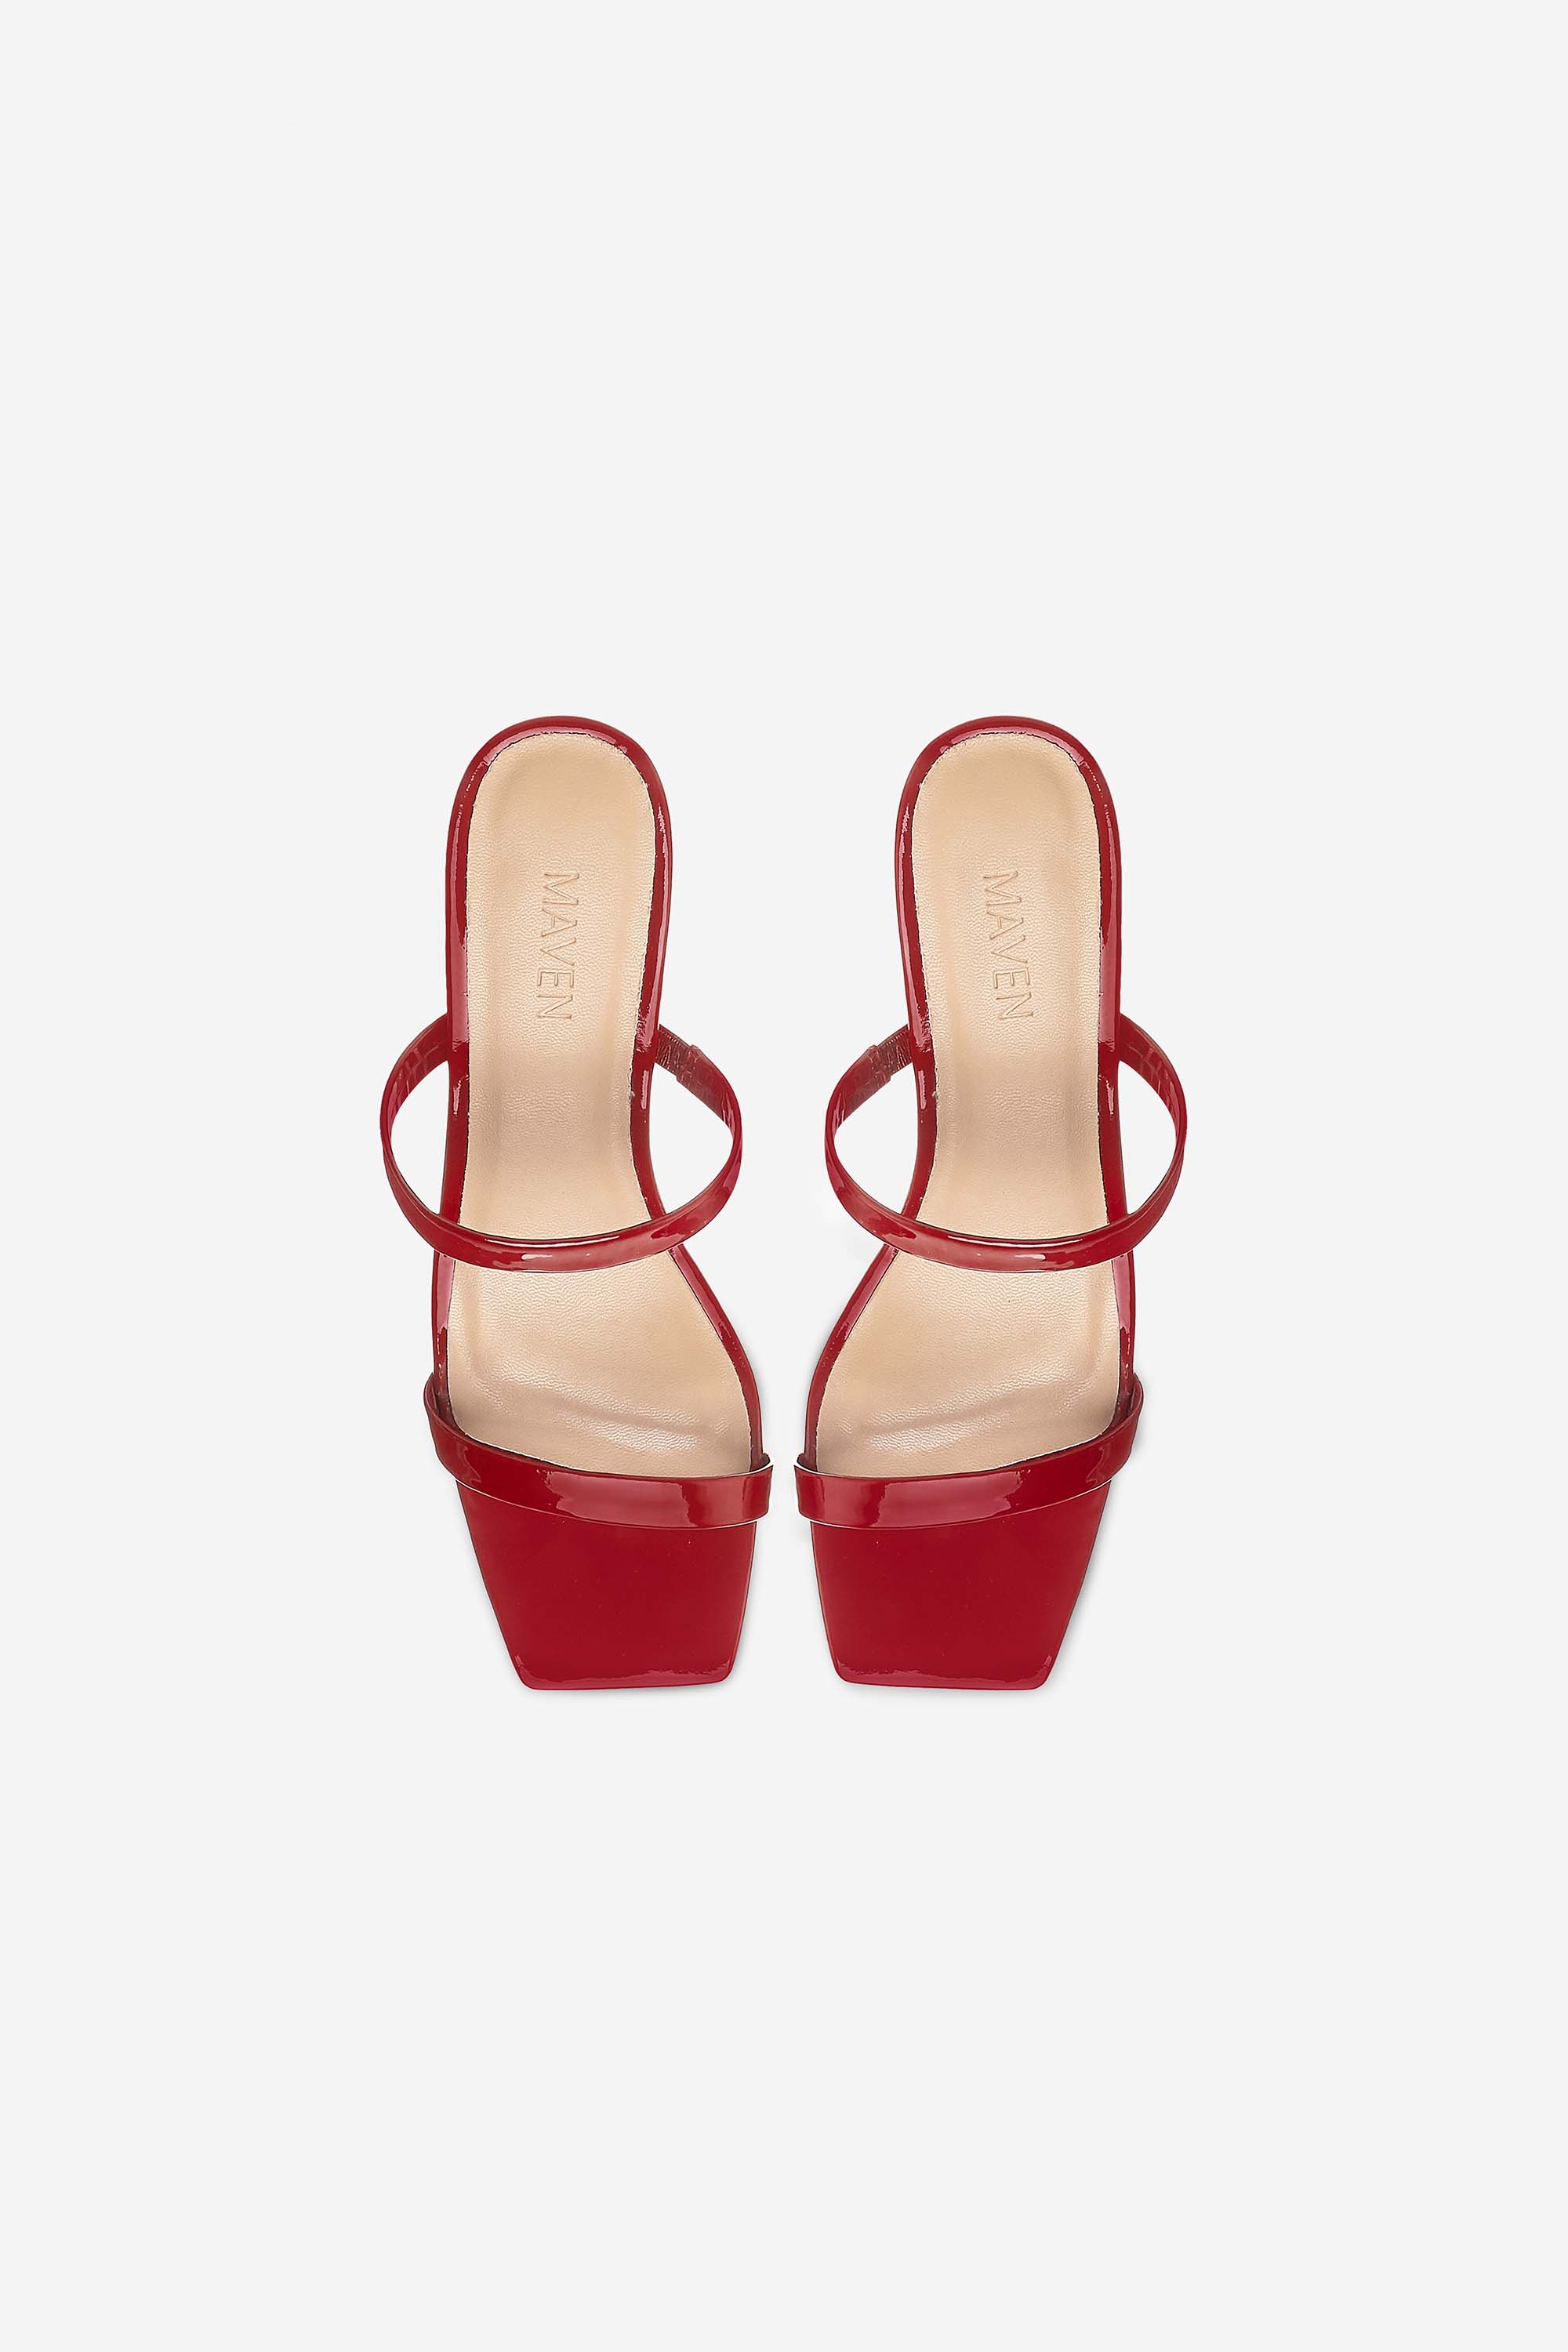 Sandy Red Heels